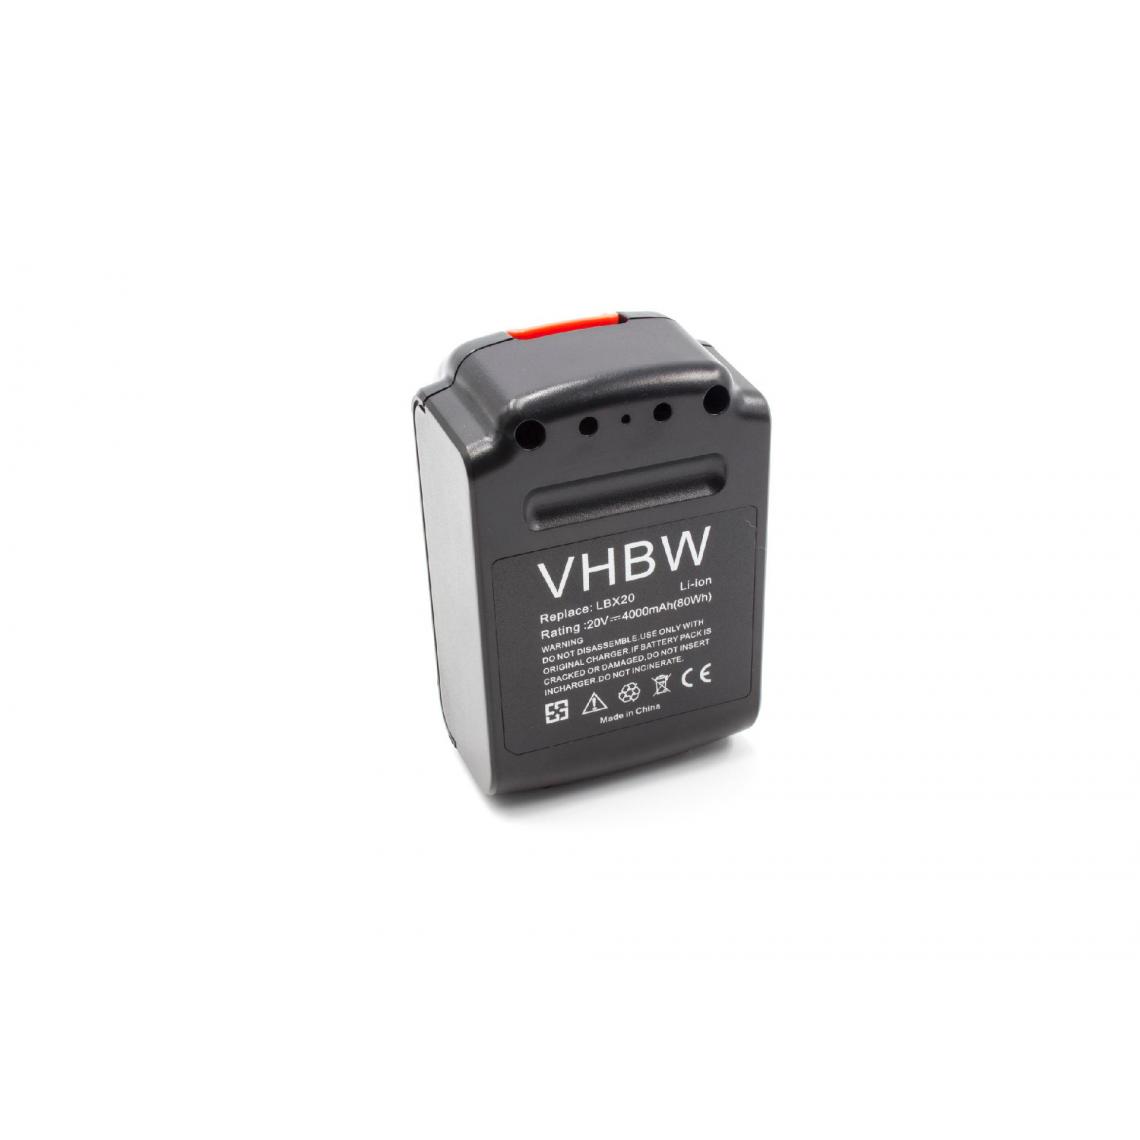 Vhbw - vhbw Batterie compatible avec Black & Decker ASL186K, ASL188K, BDC120VA100, BDCDMT120, BDCDMT120F outil électrique (4000mAh Li-ion 20V) - Accessoires vissage, perçage